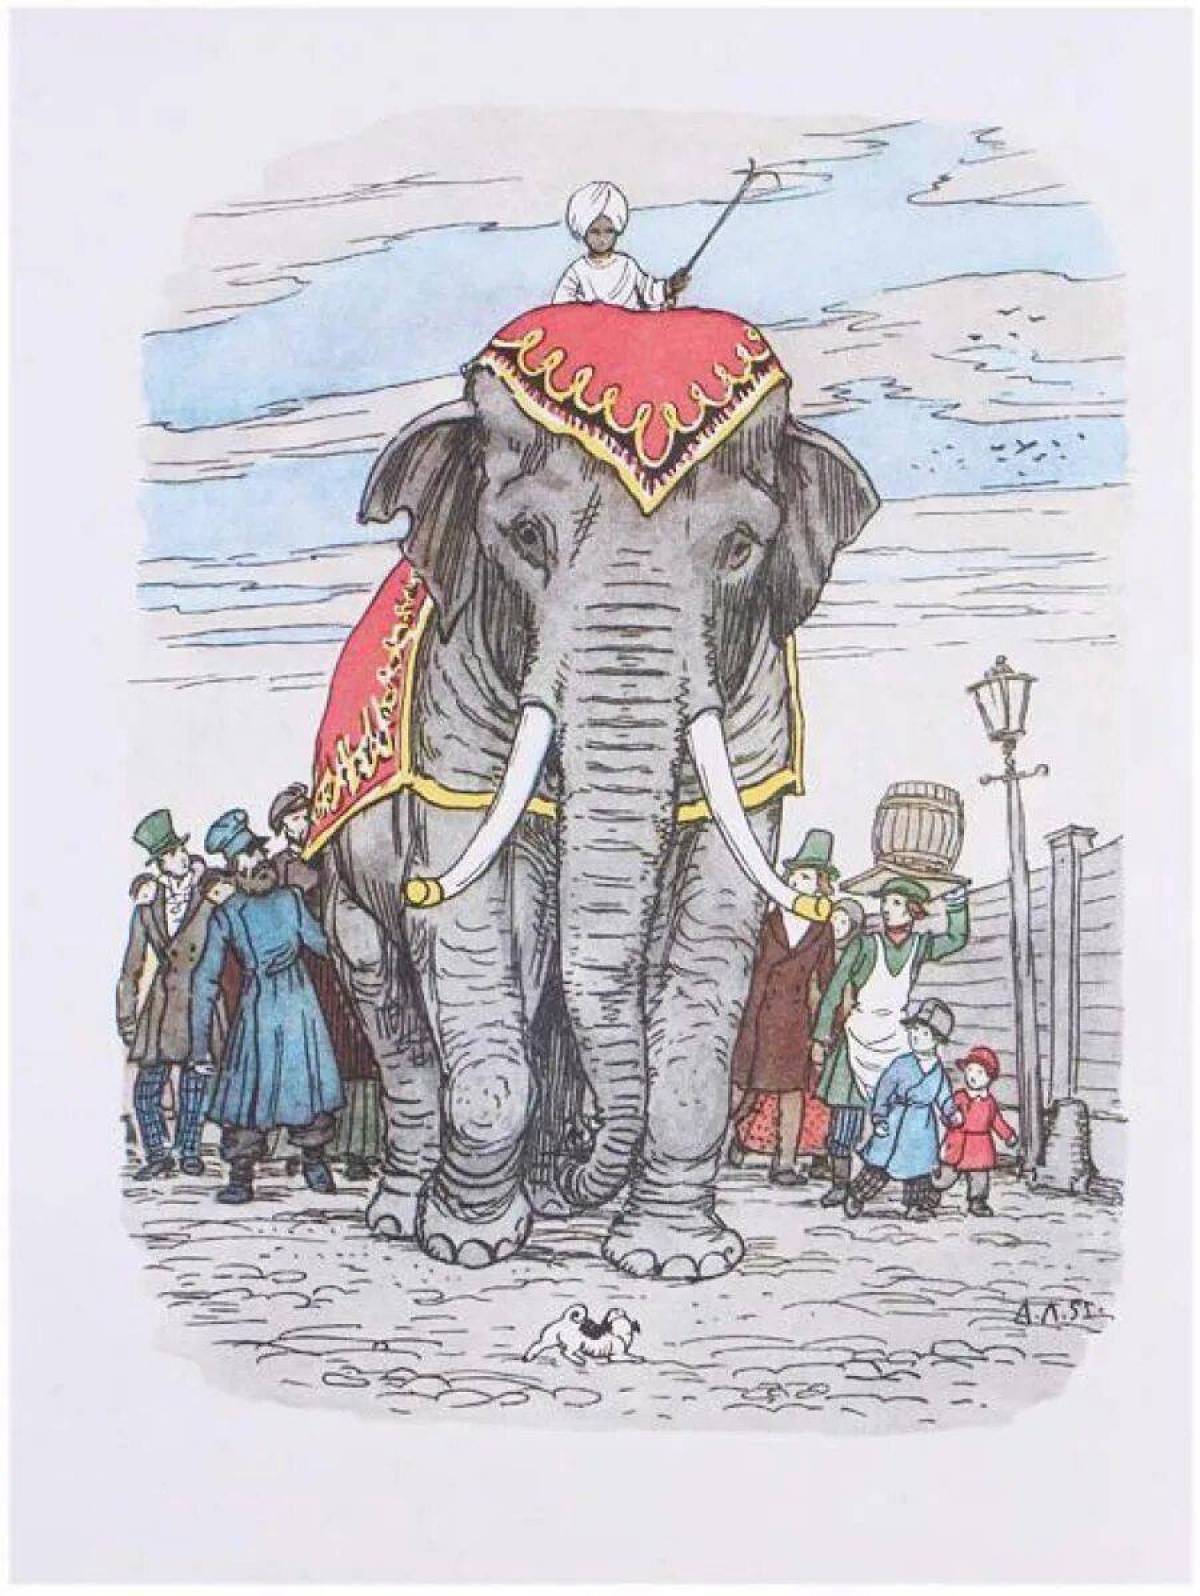 Слон и моська автор. Басня Крылова слон и моська. Басня слон и моська Крылов. Рисунок к басне Крылова слон и моська.